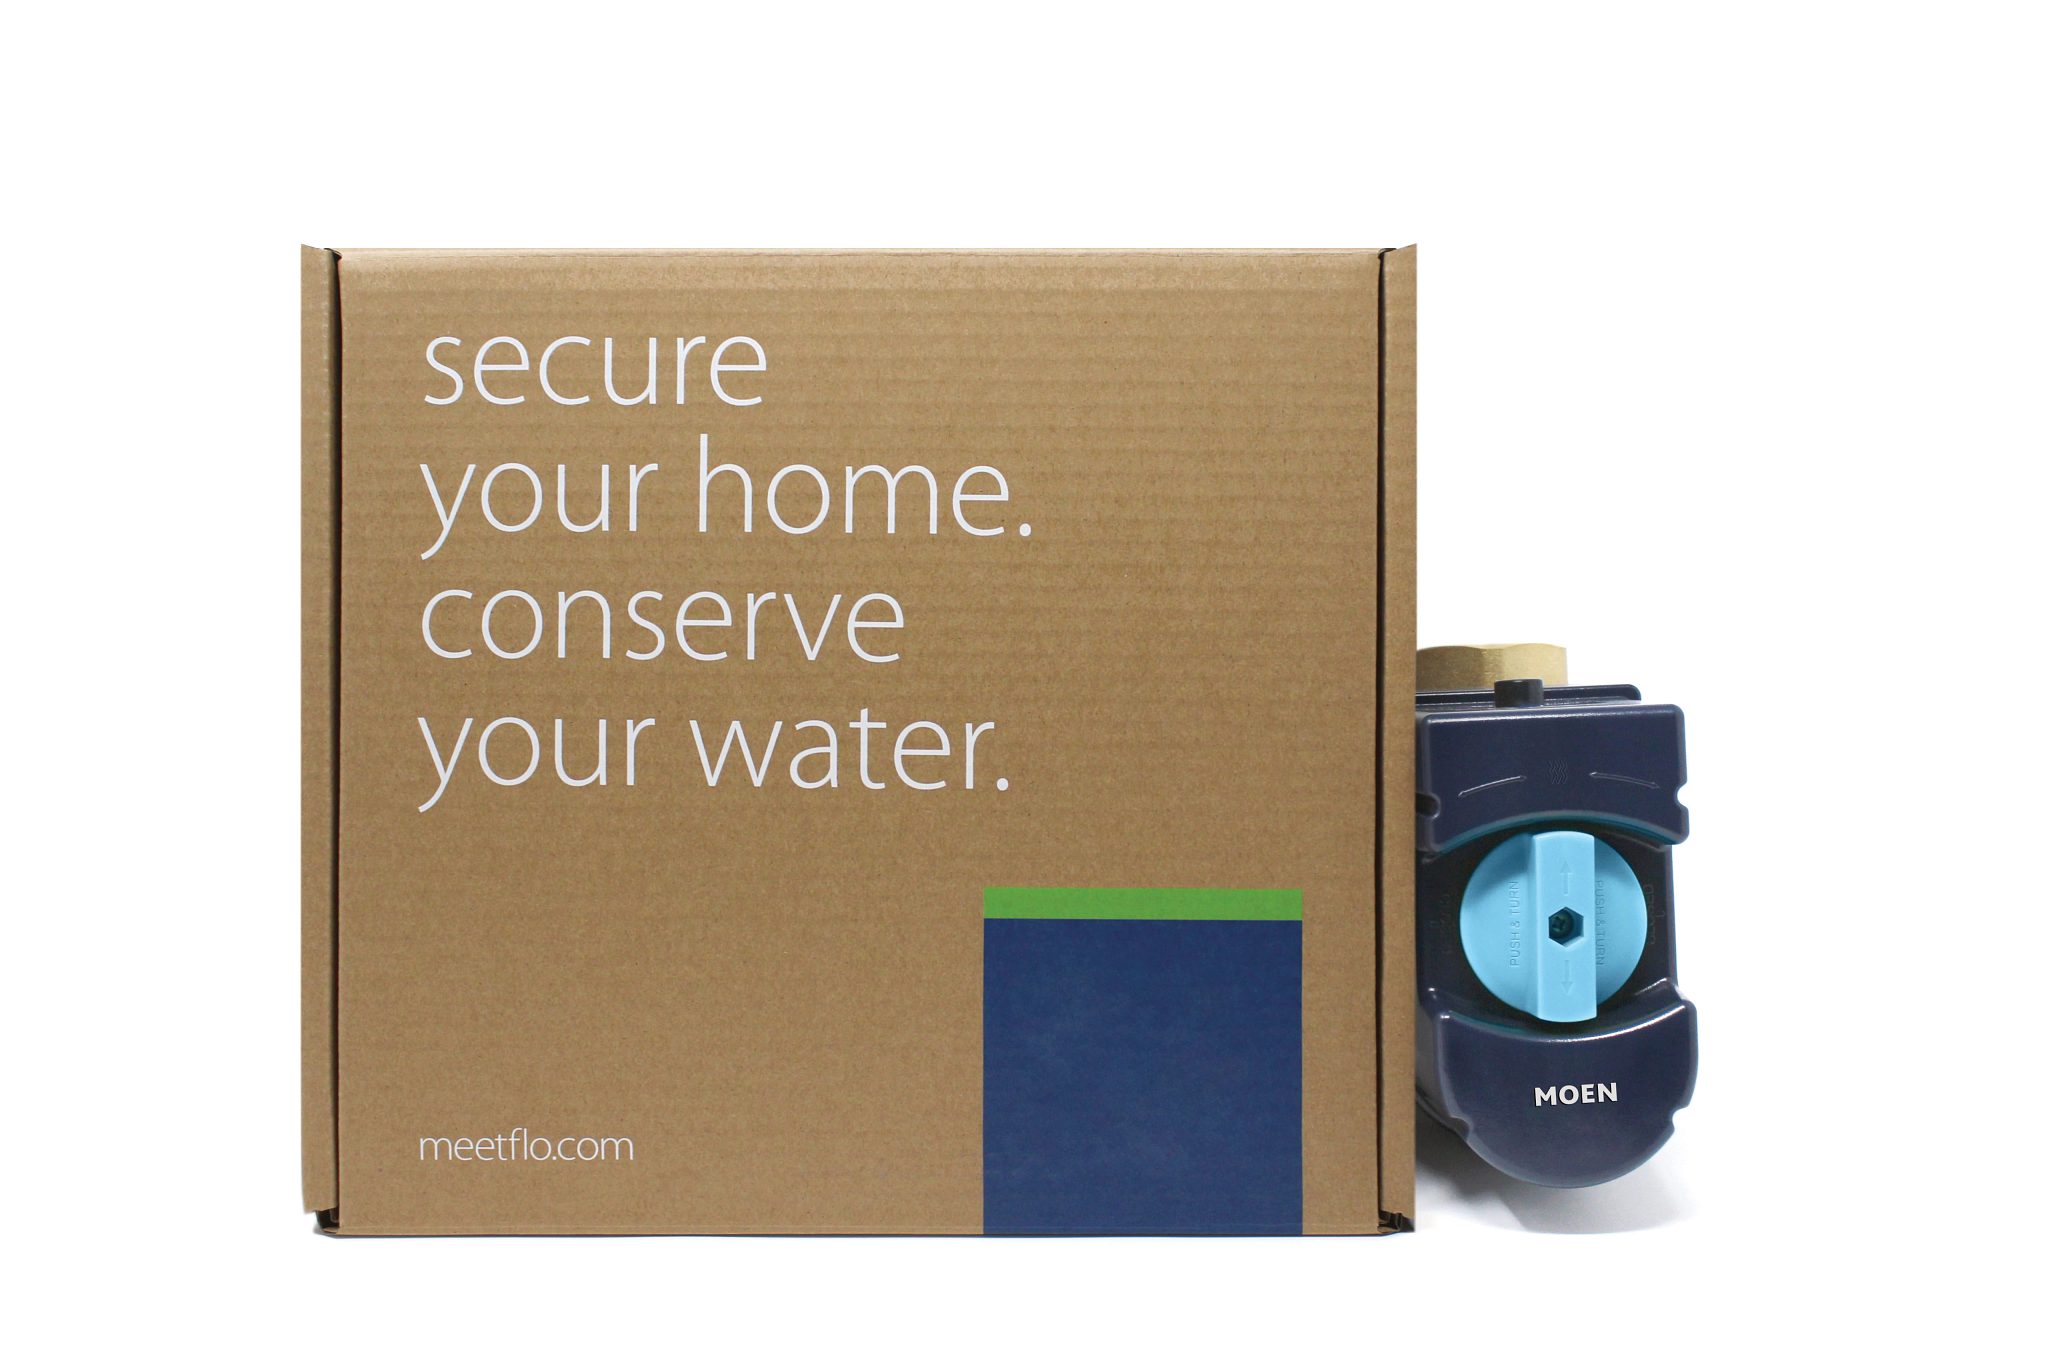 A moen flow smart home leak protection system, a proud partner of WyattWorks. 